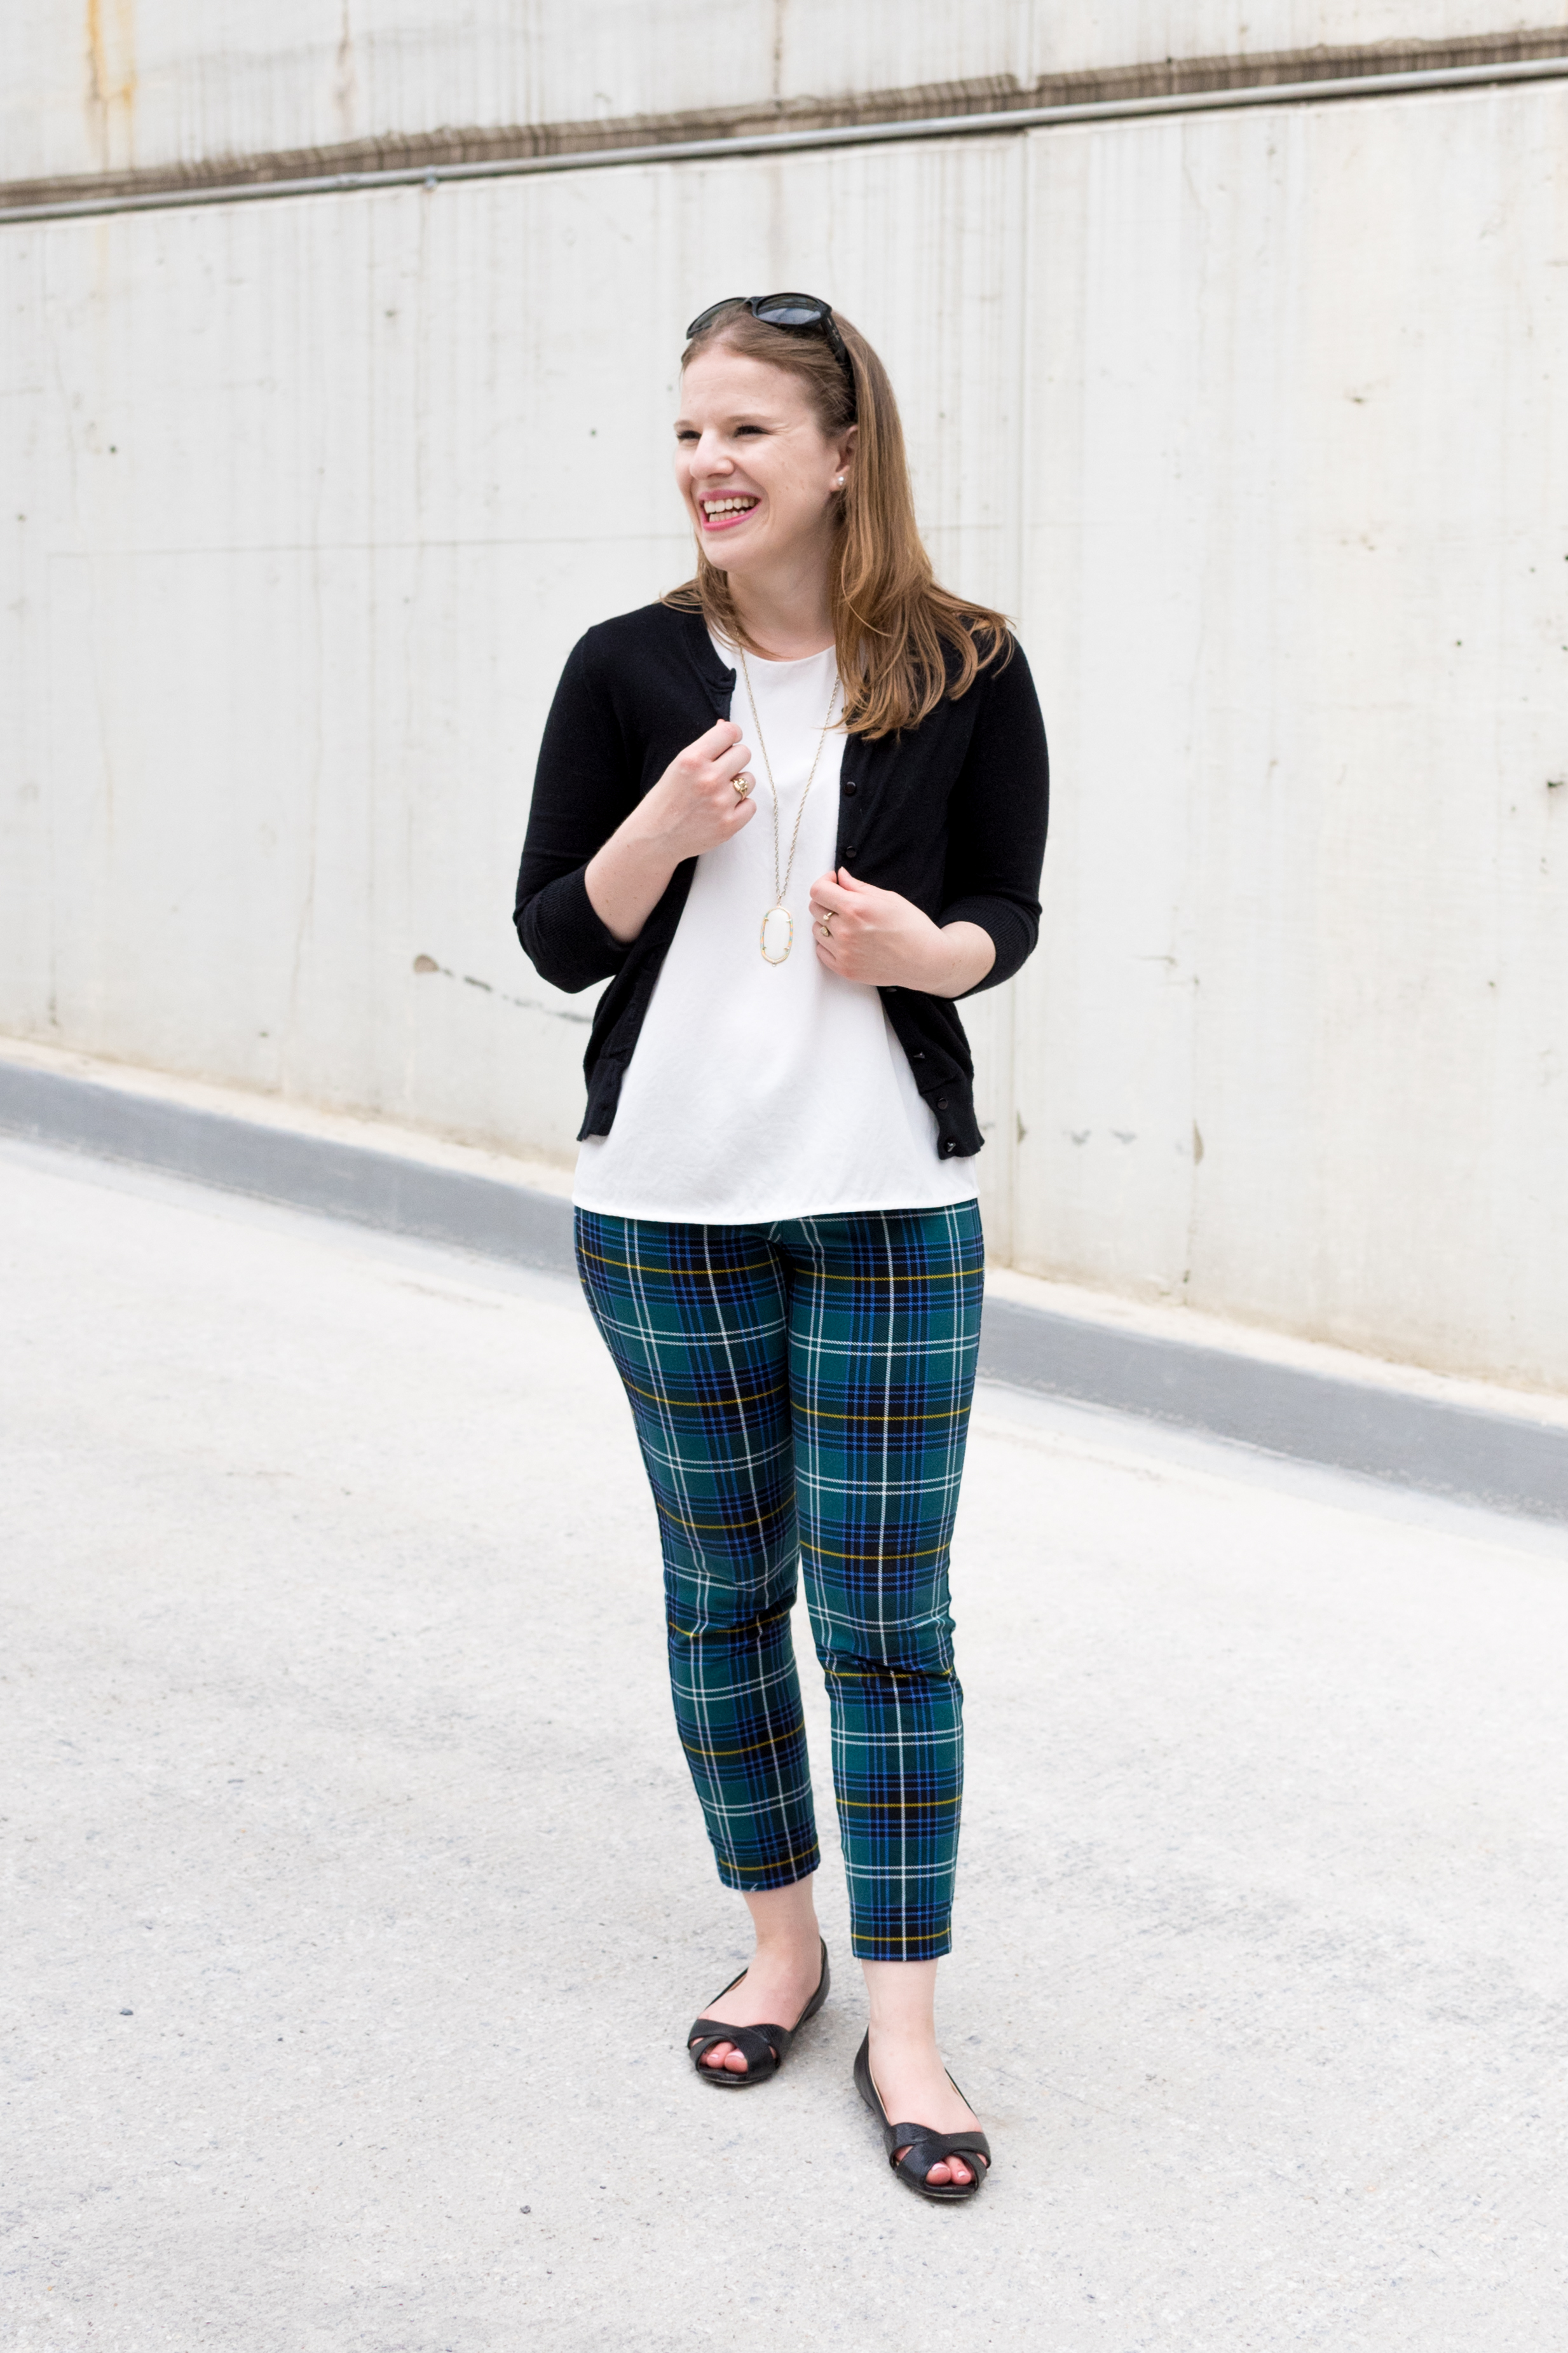 DC woman blogger wearing plaid pants